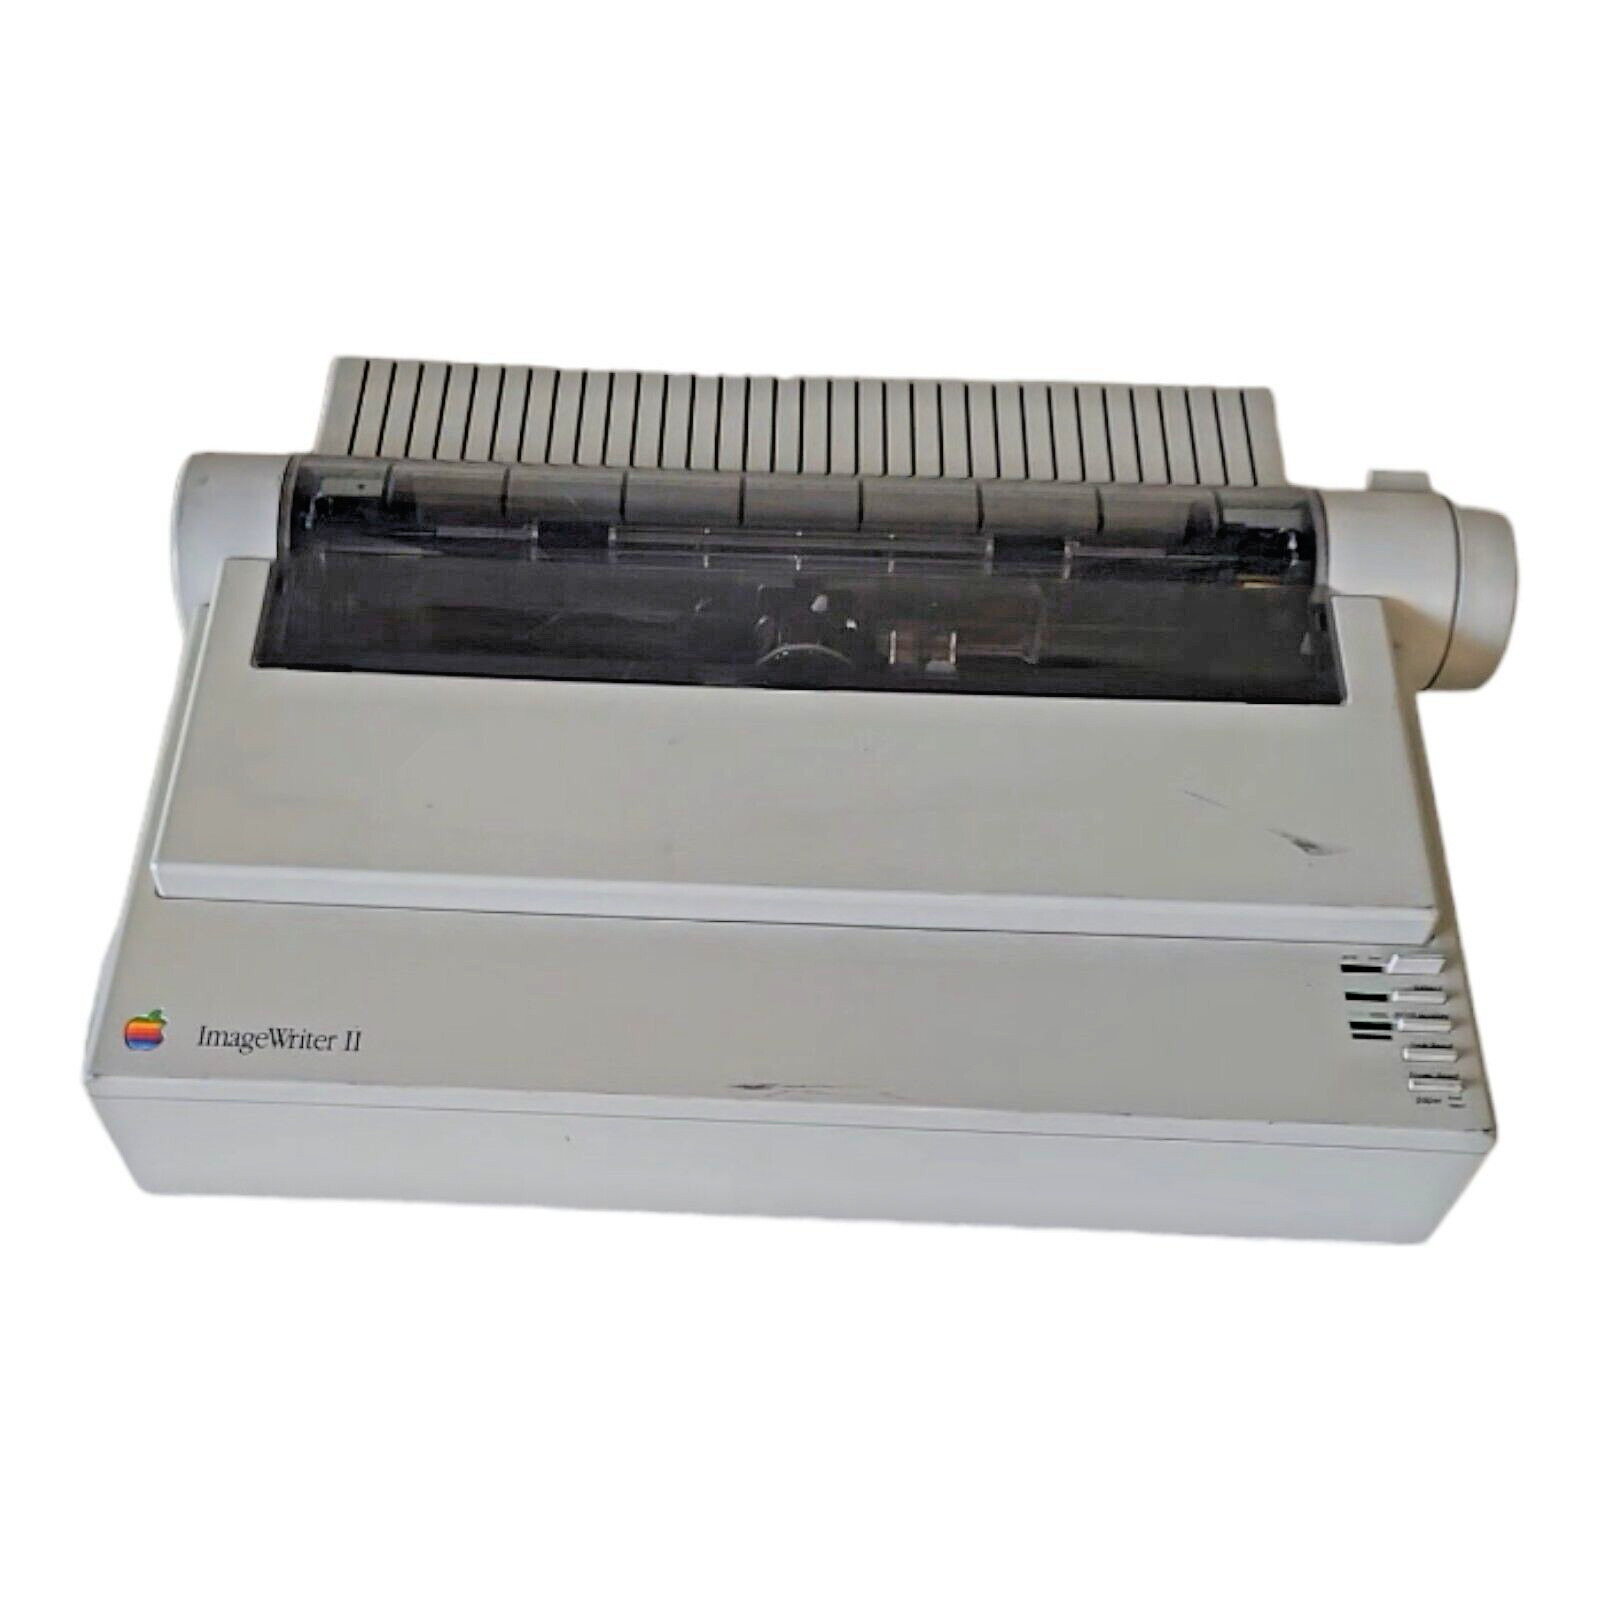 Rare Vintage Apple ImageWriter II A9M0320 Dot Matrix Printer - UNTESTED